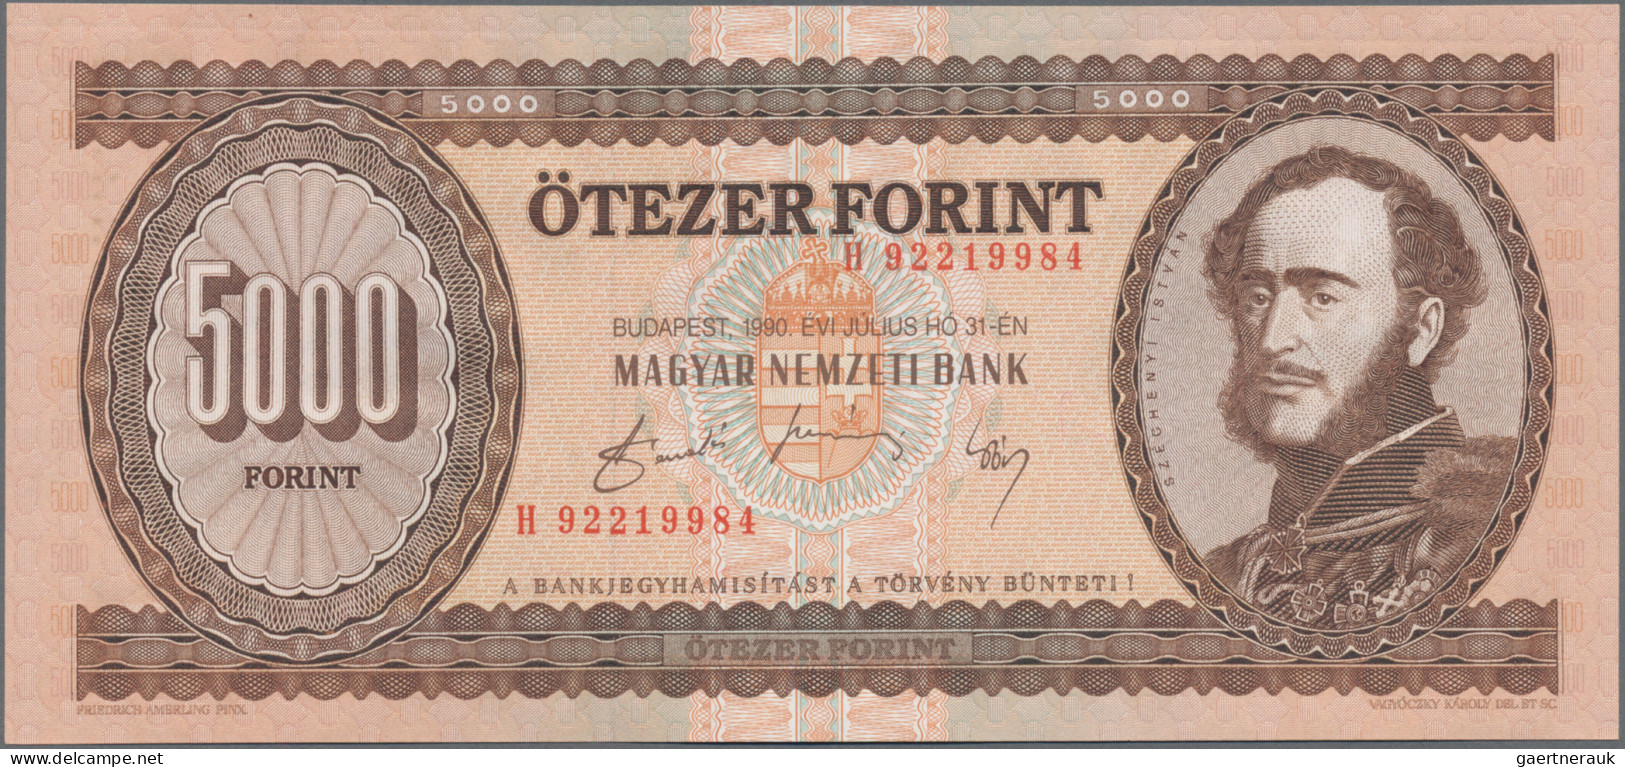 Hungary: Magyar Nemzeti Bank 5000 Forint 1990 + 1995, P.177a+d, In Perfect Condi - Ungheria